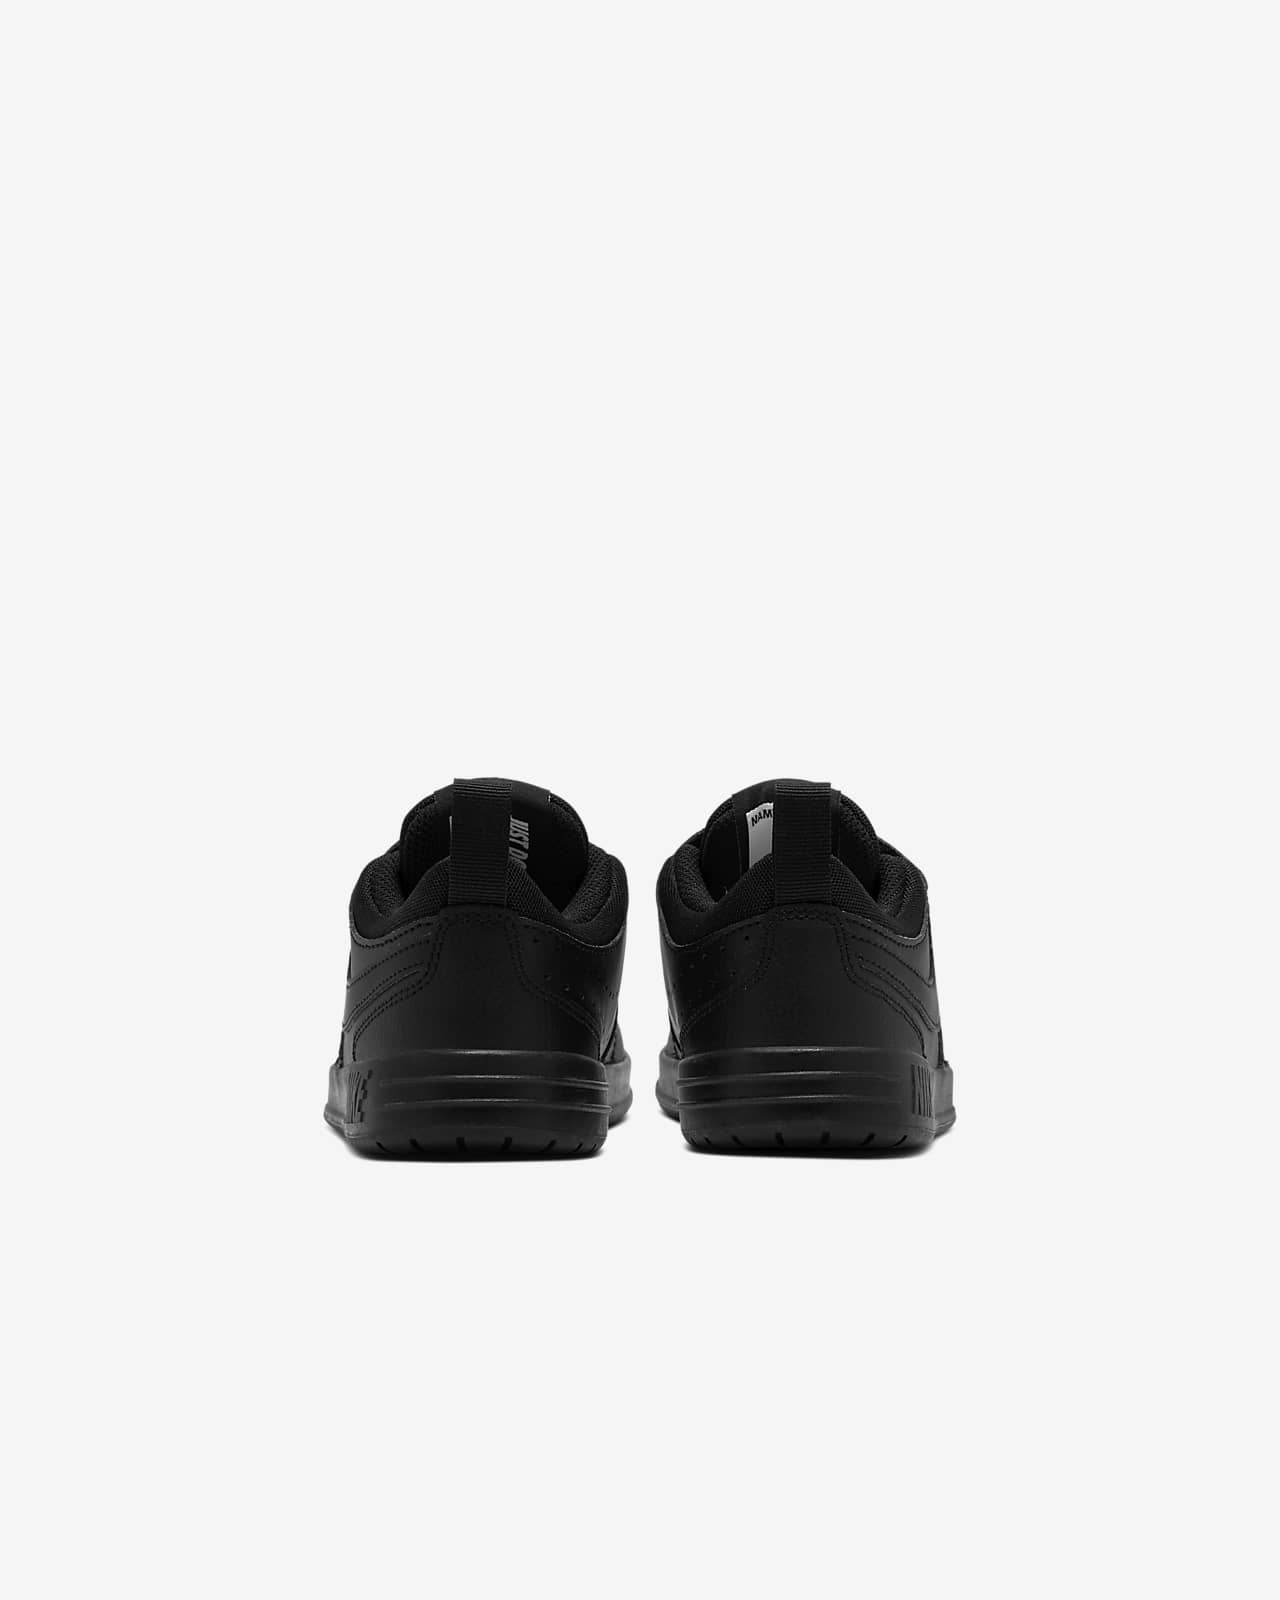 Nike Pico: Comprar Zapatillas Niño/a Nike Pico 5 AR4161 100 Blancas